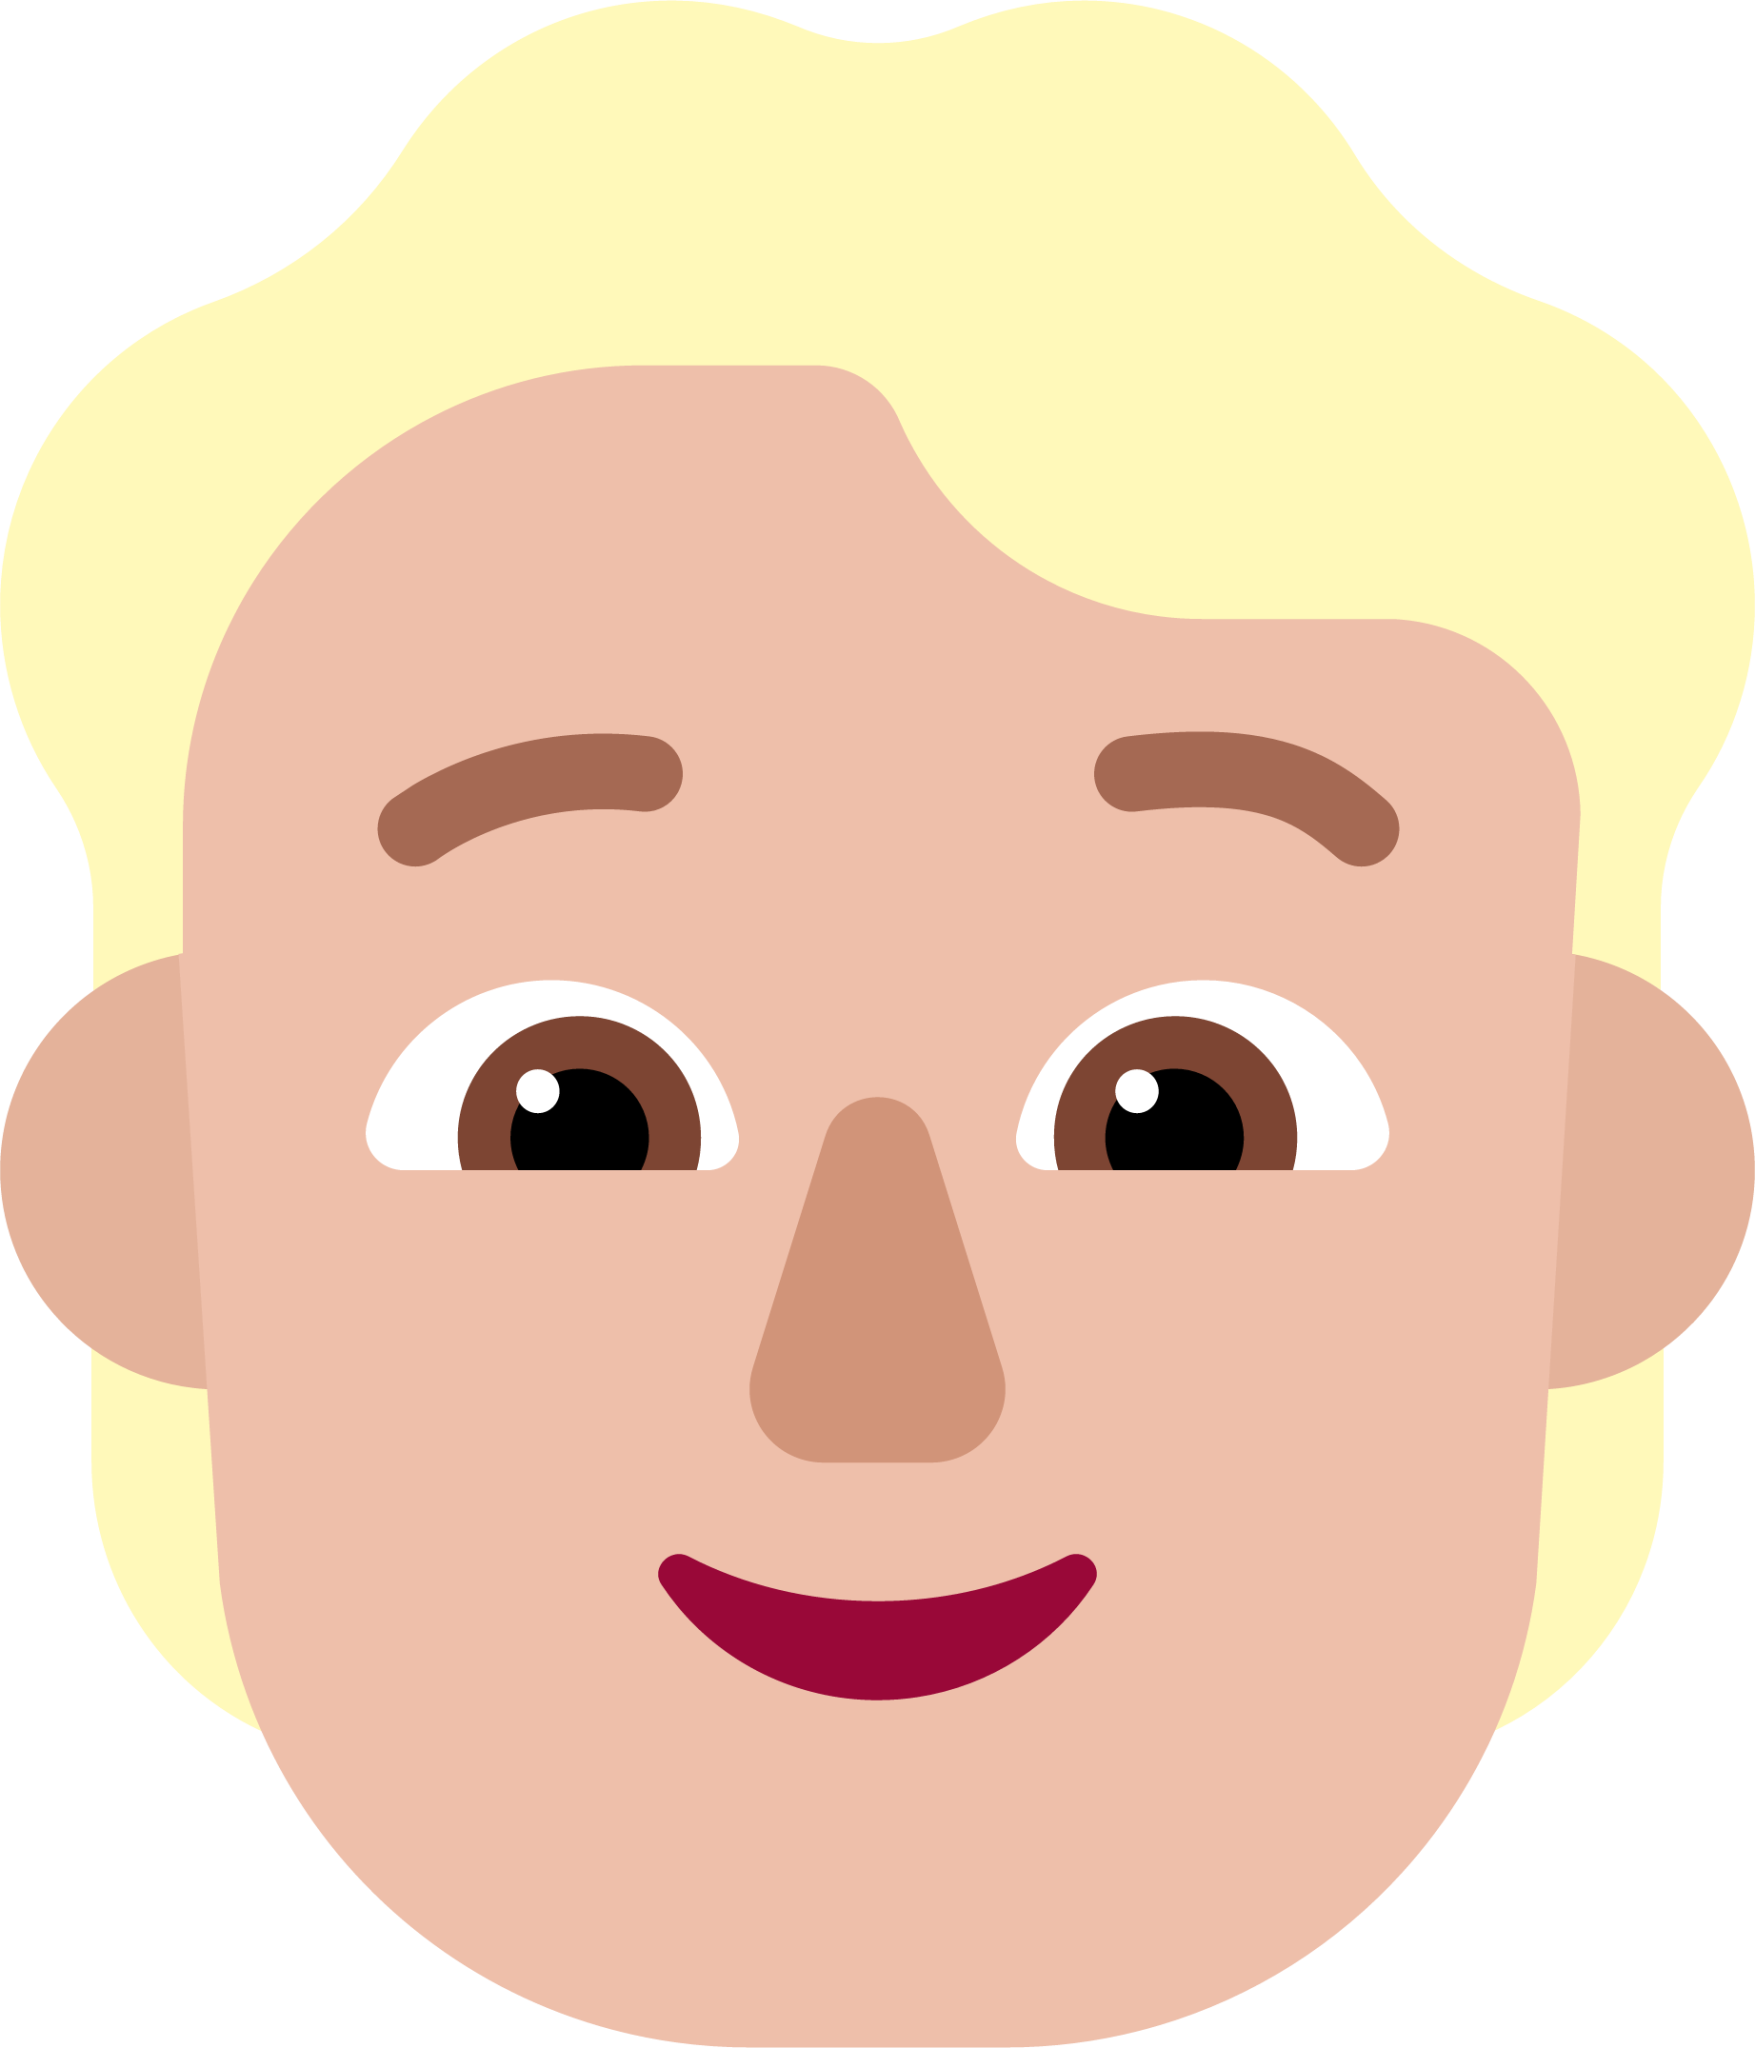 person blonde hair medium light emoji